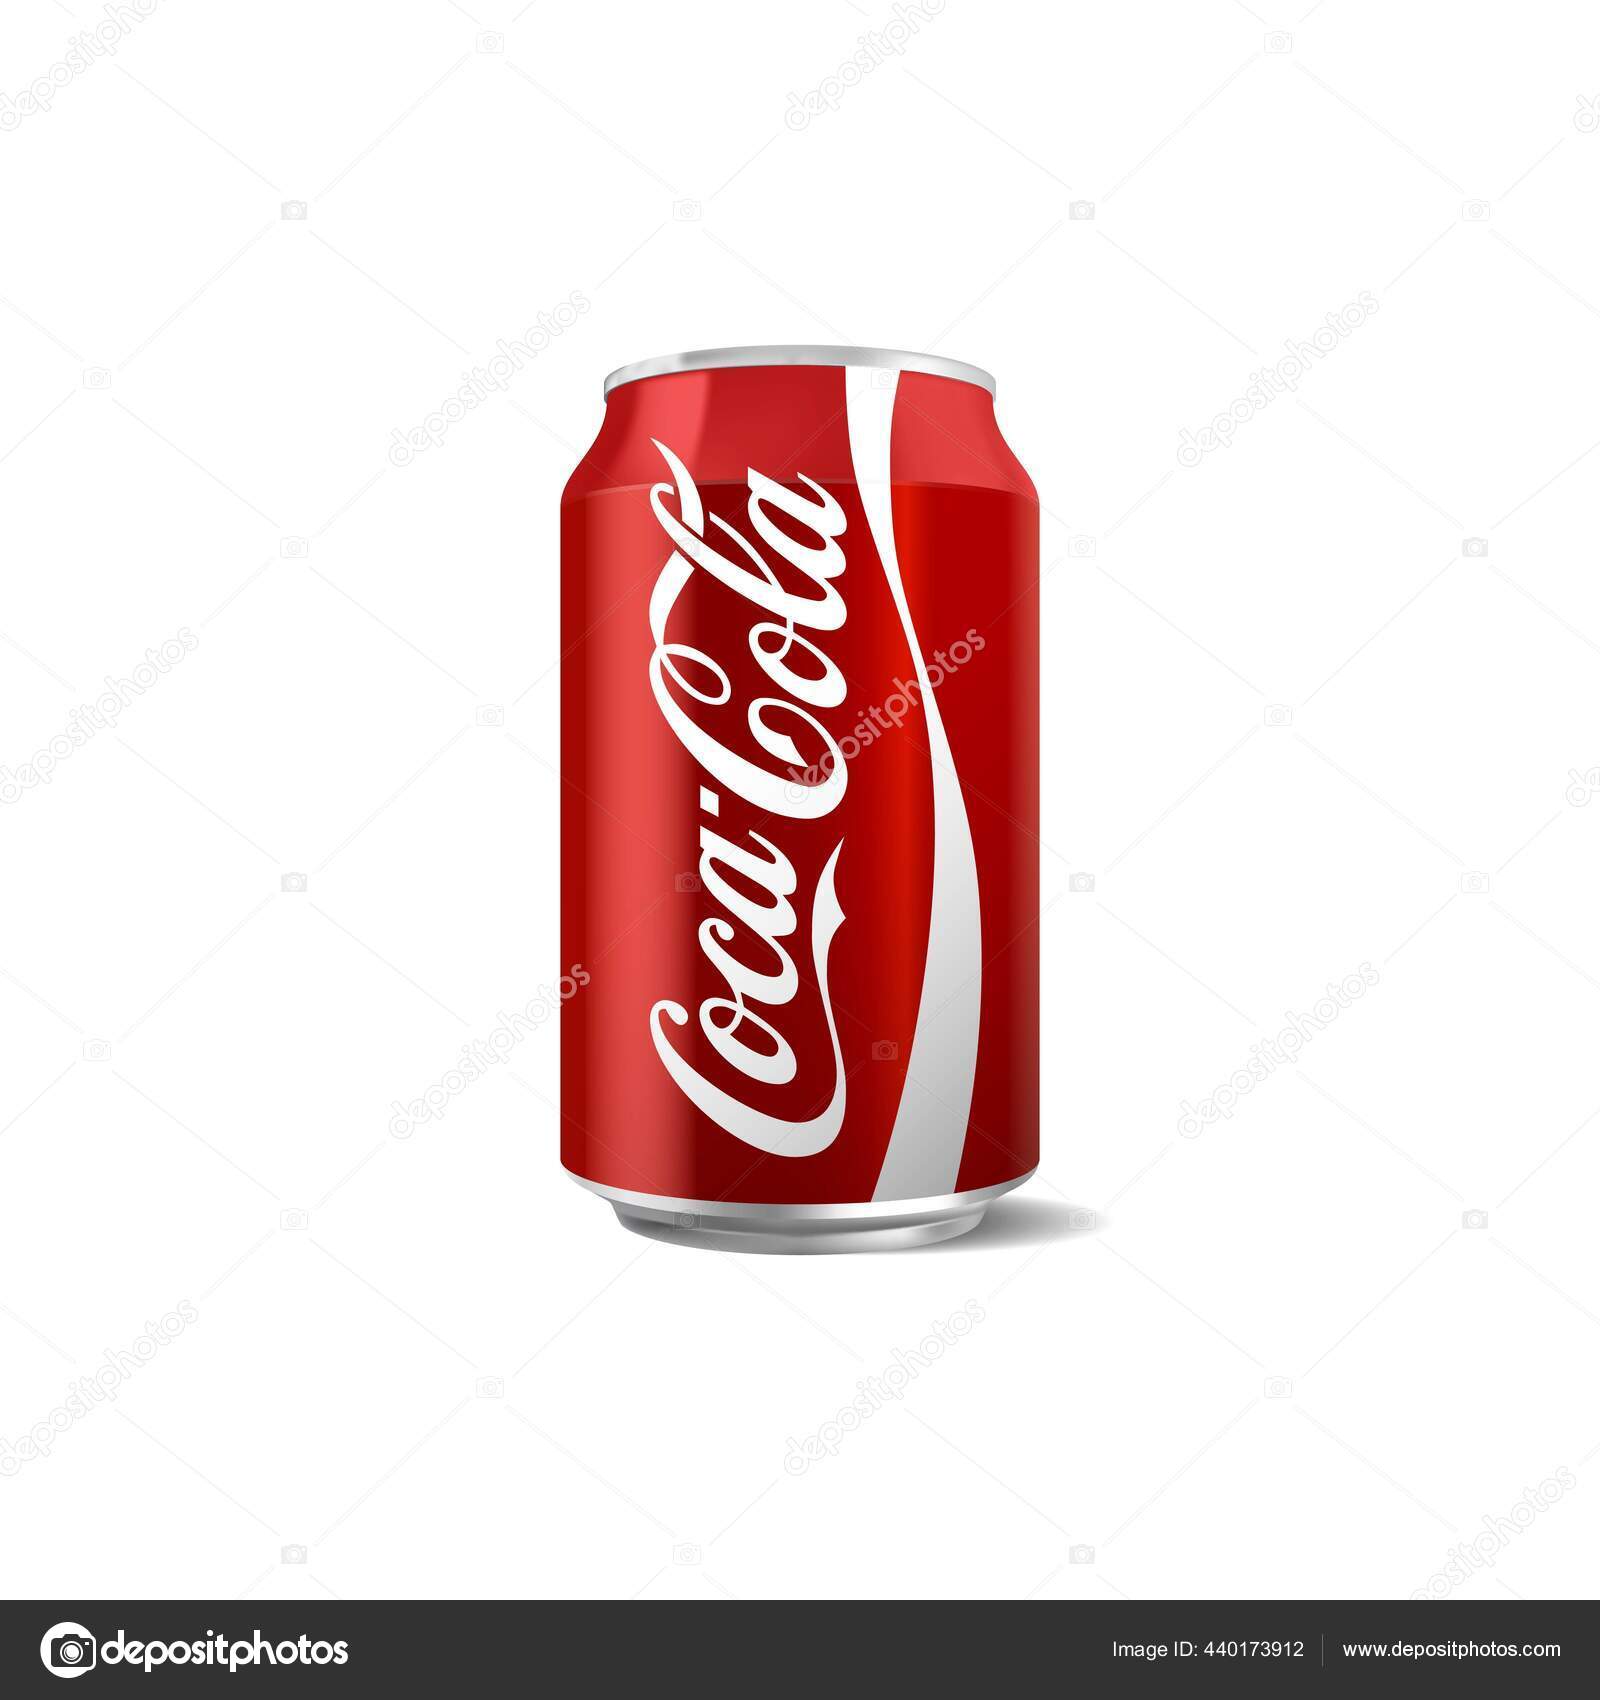 Refresco de cola Coca Cola lata 33 cl. – The Food Please